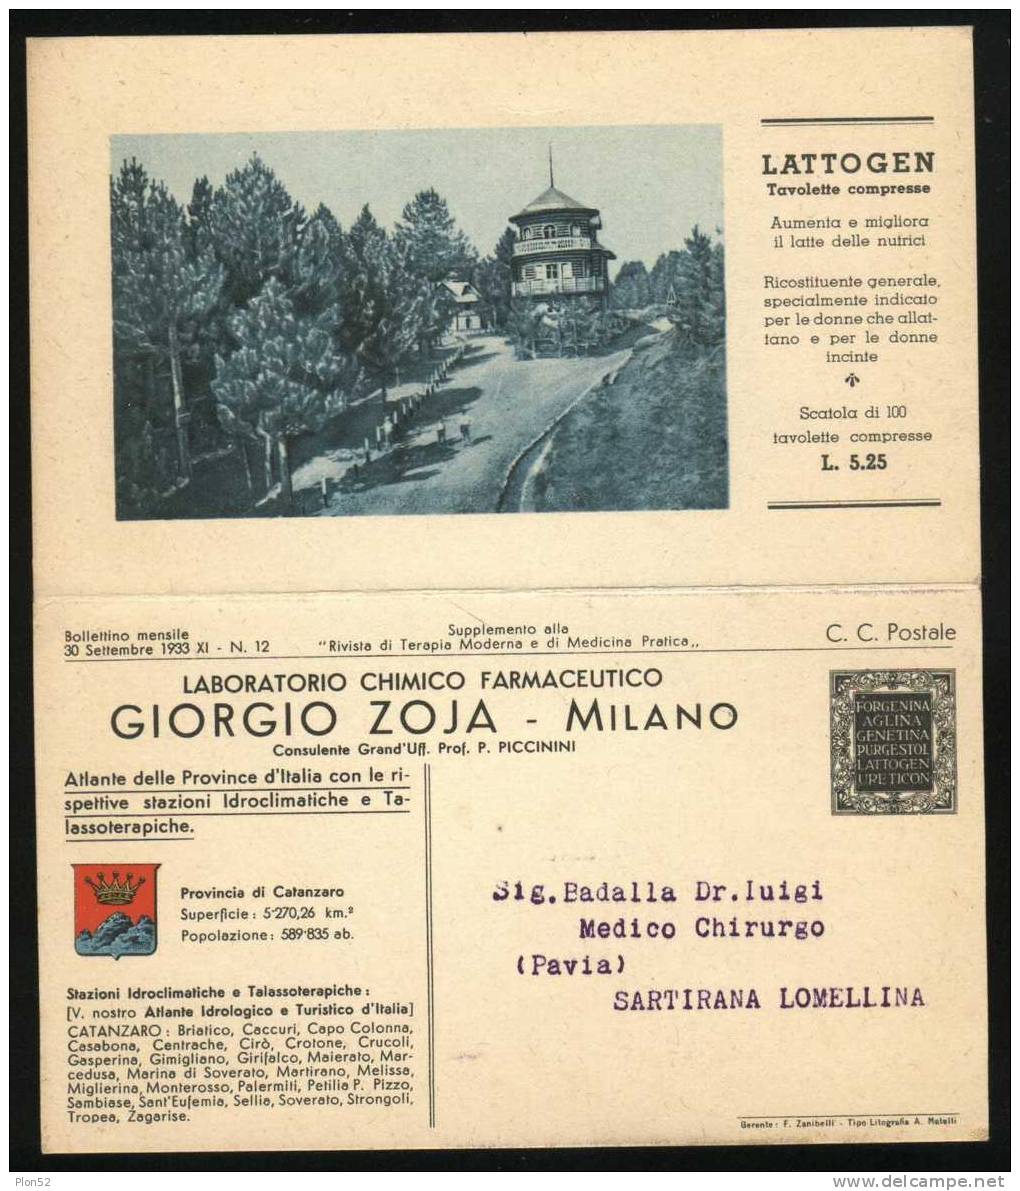 5033-CATANZARO-CARTINA DELLA PROVINCIA-PUBBLICITA´ MEDICINALI-1933 - Catanzaro